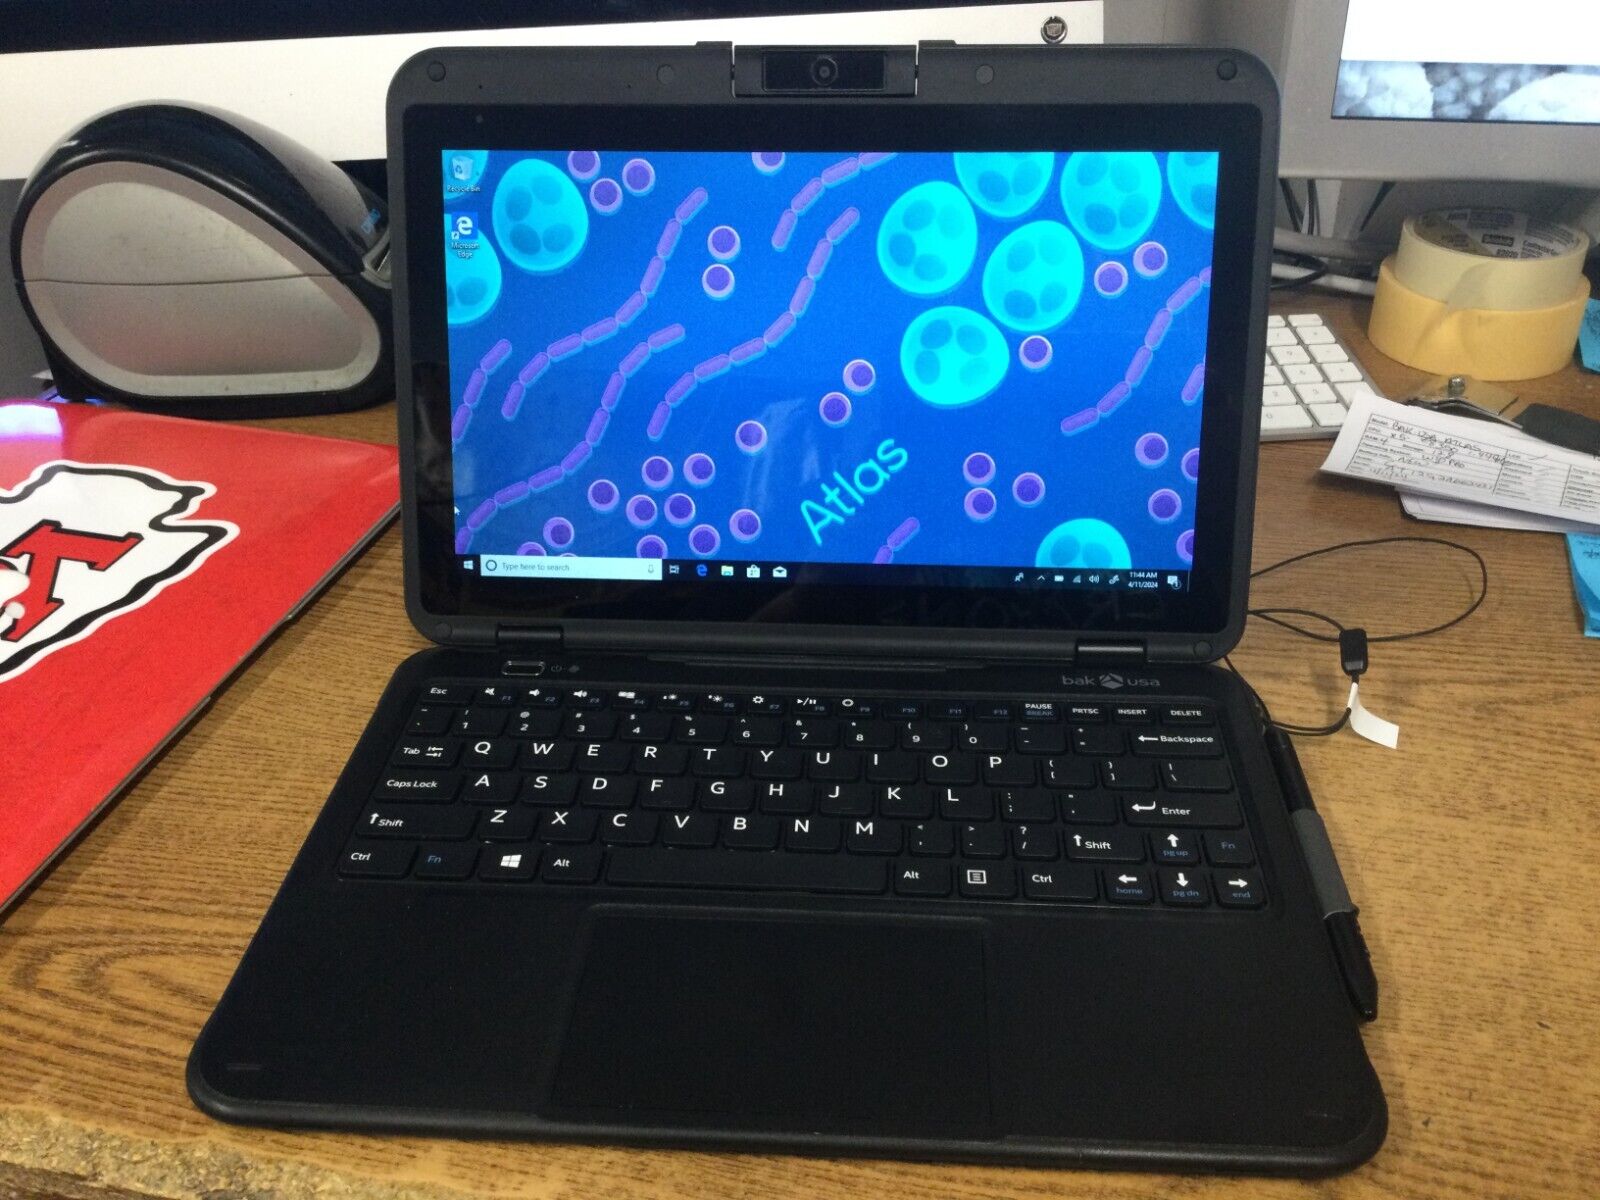 Bak USA Atlas 2-in-1 Laptop/Tablet PC Intel Atom x5-Z8350 4GB RAM 128GB SSD